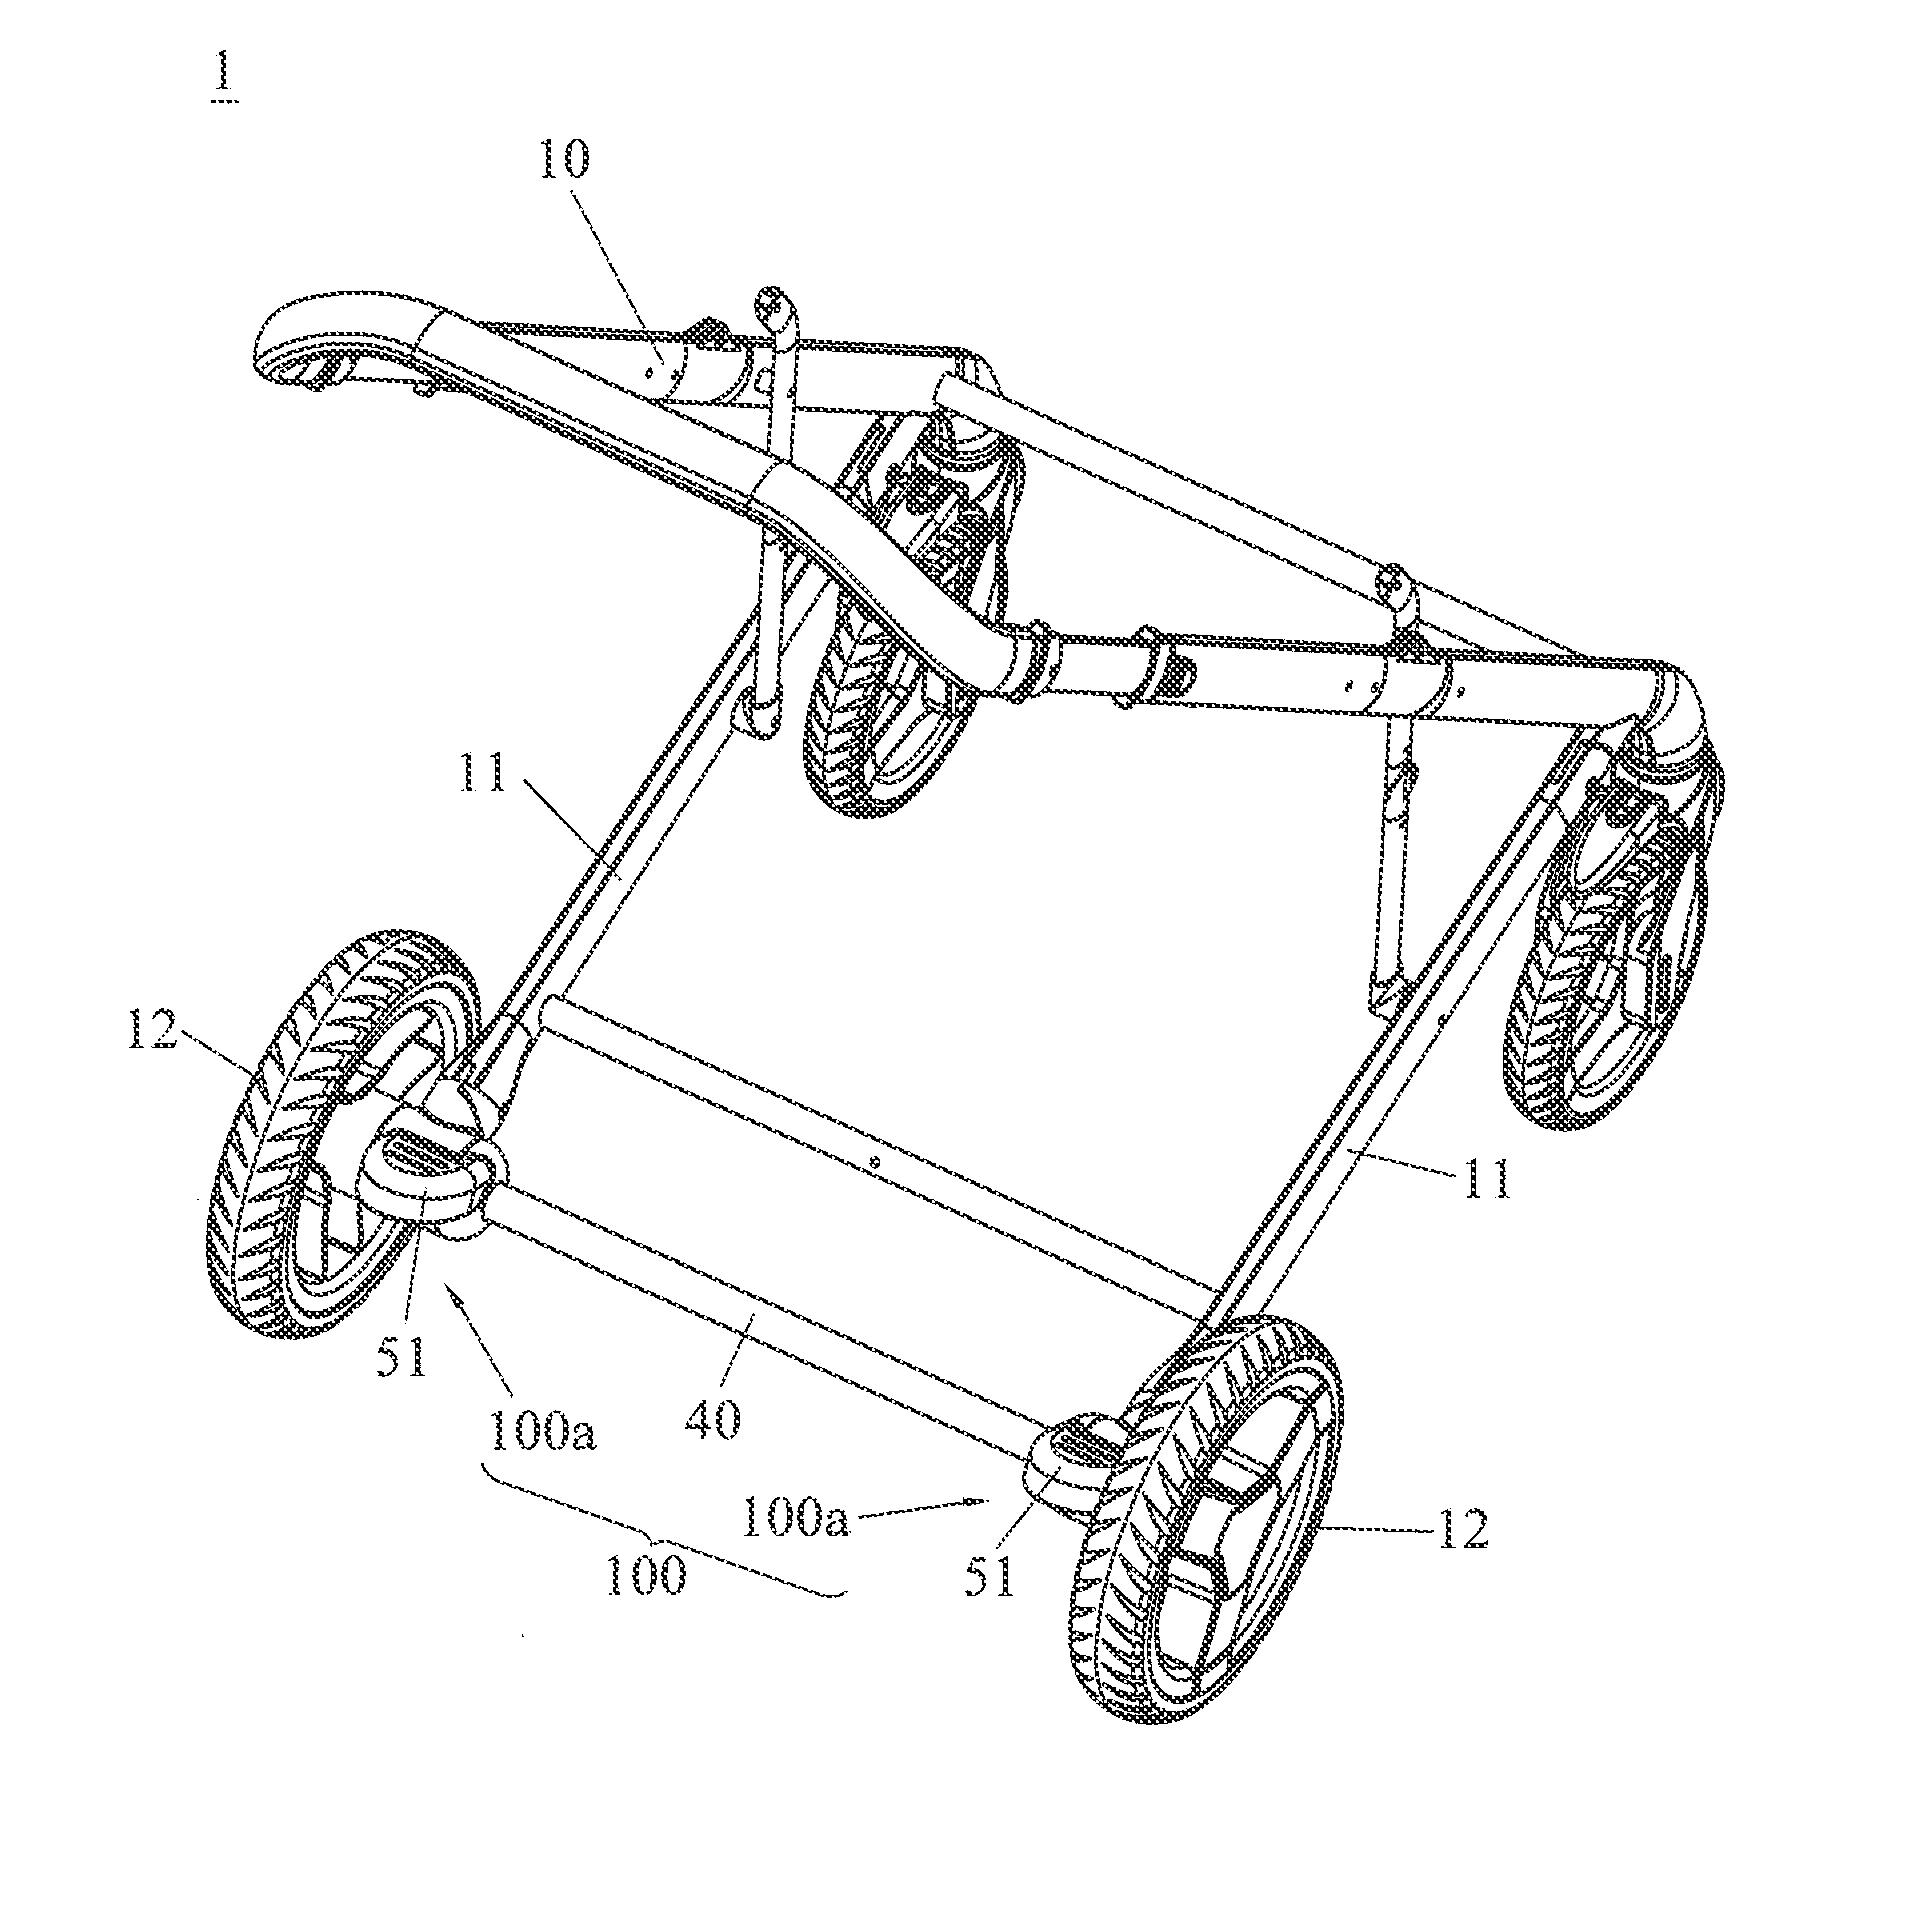 Brake Mechanism for an Infant Stroller Apparatus